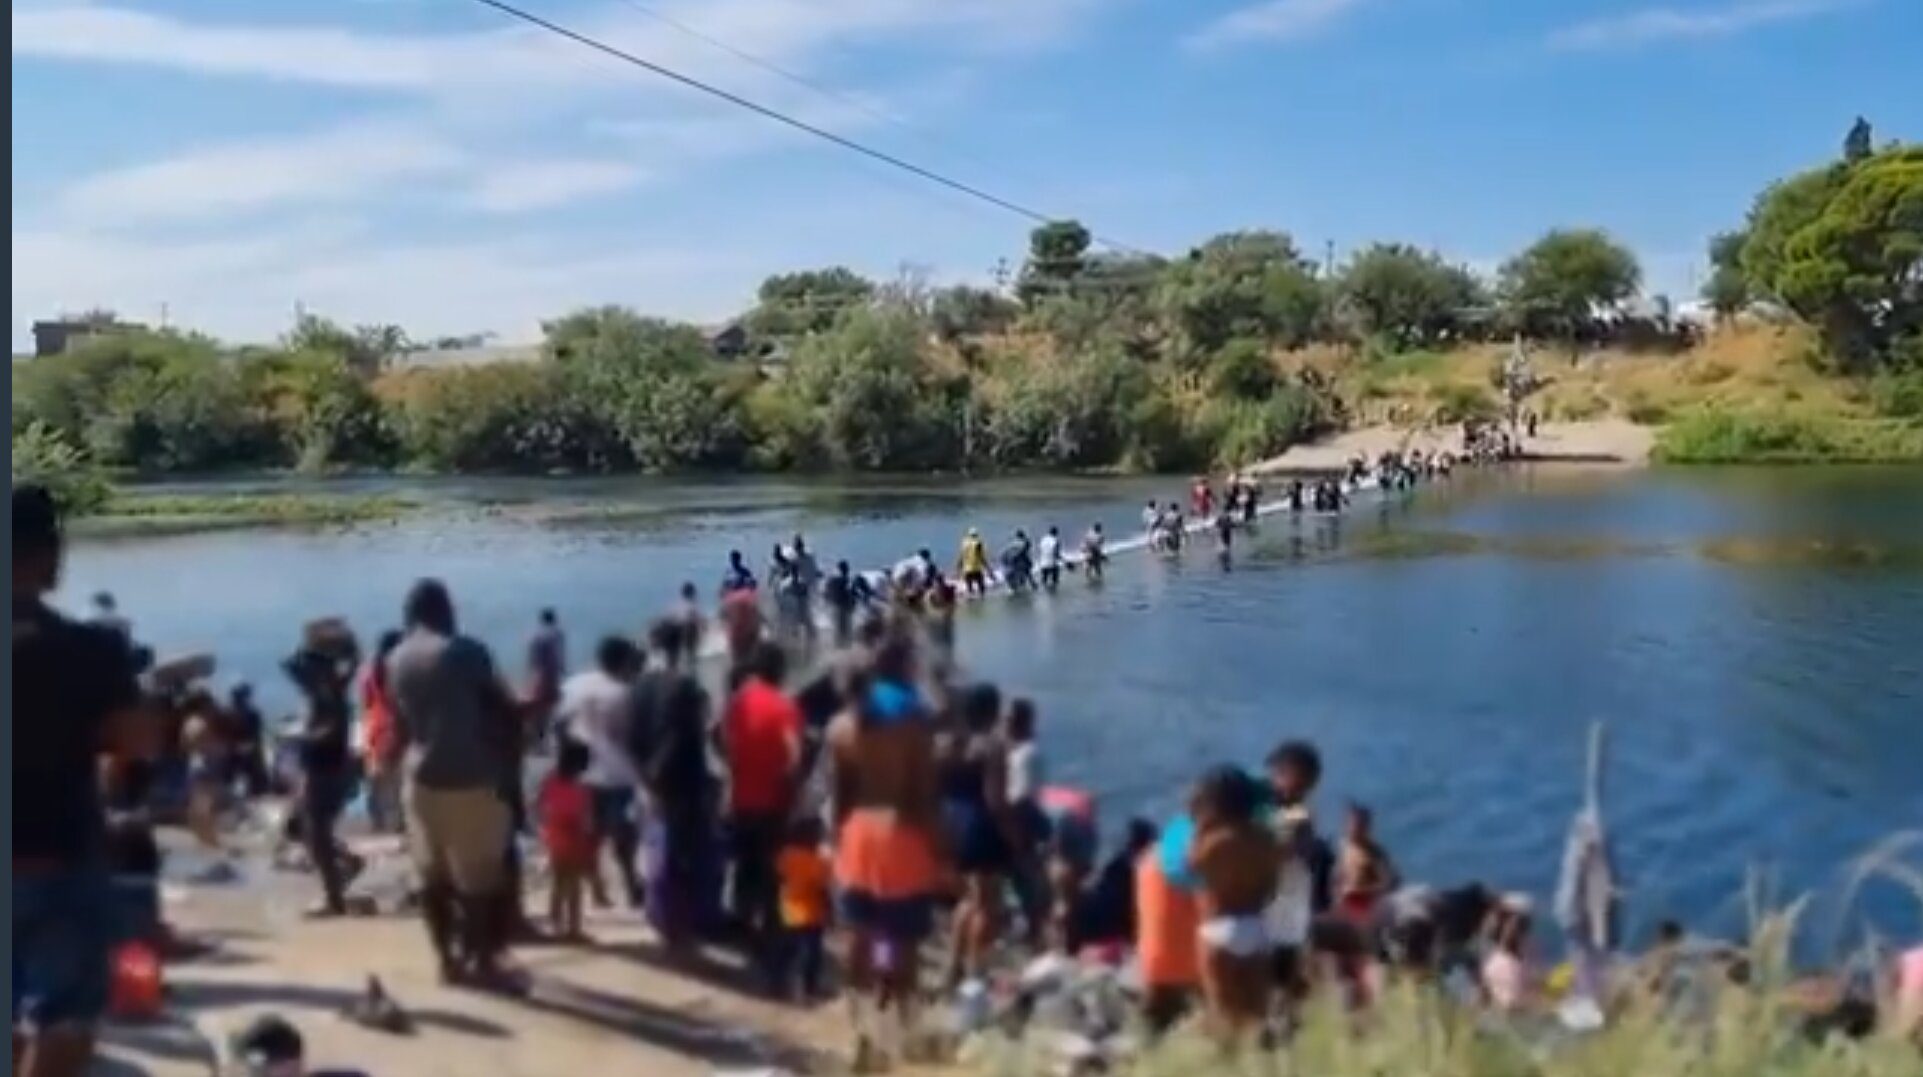 Del Rio Texas Rio Grande Mass Migration Screen Image Ted Cruz Twitter 09162021